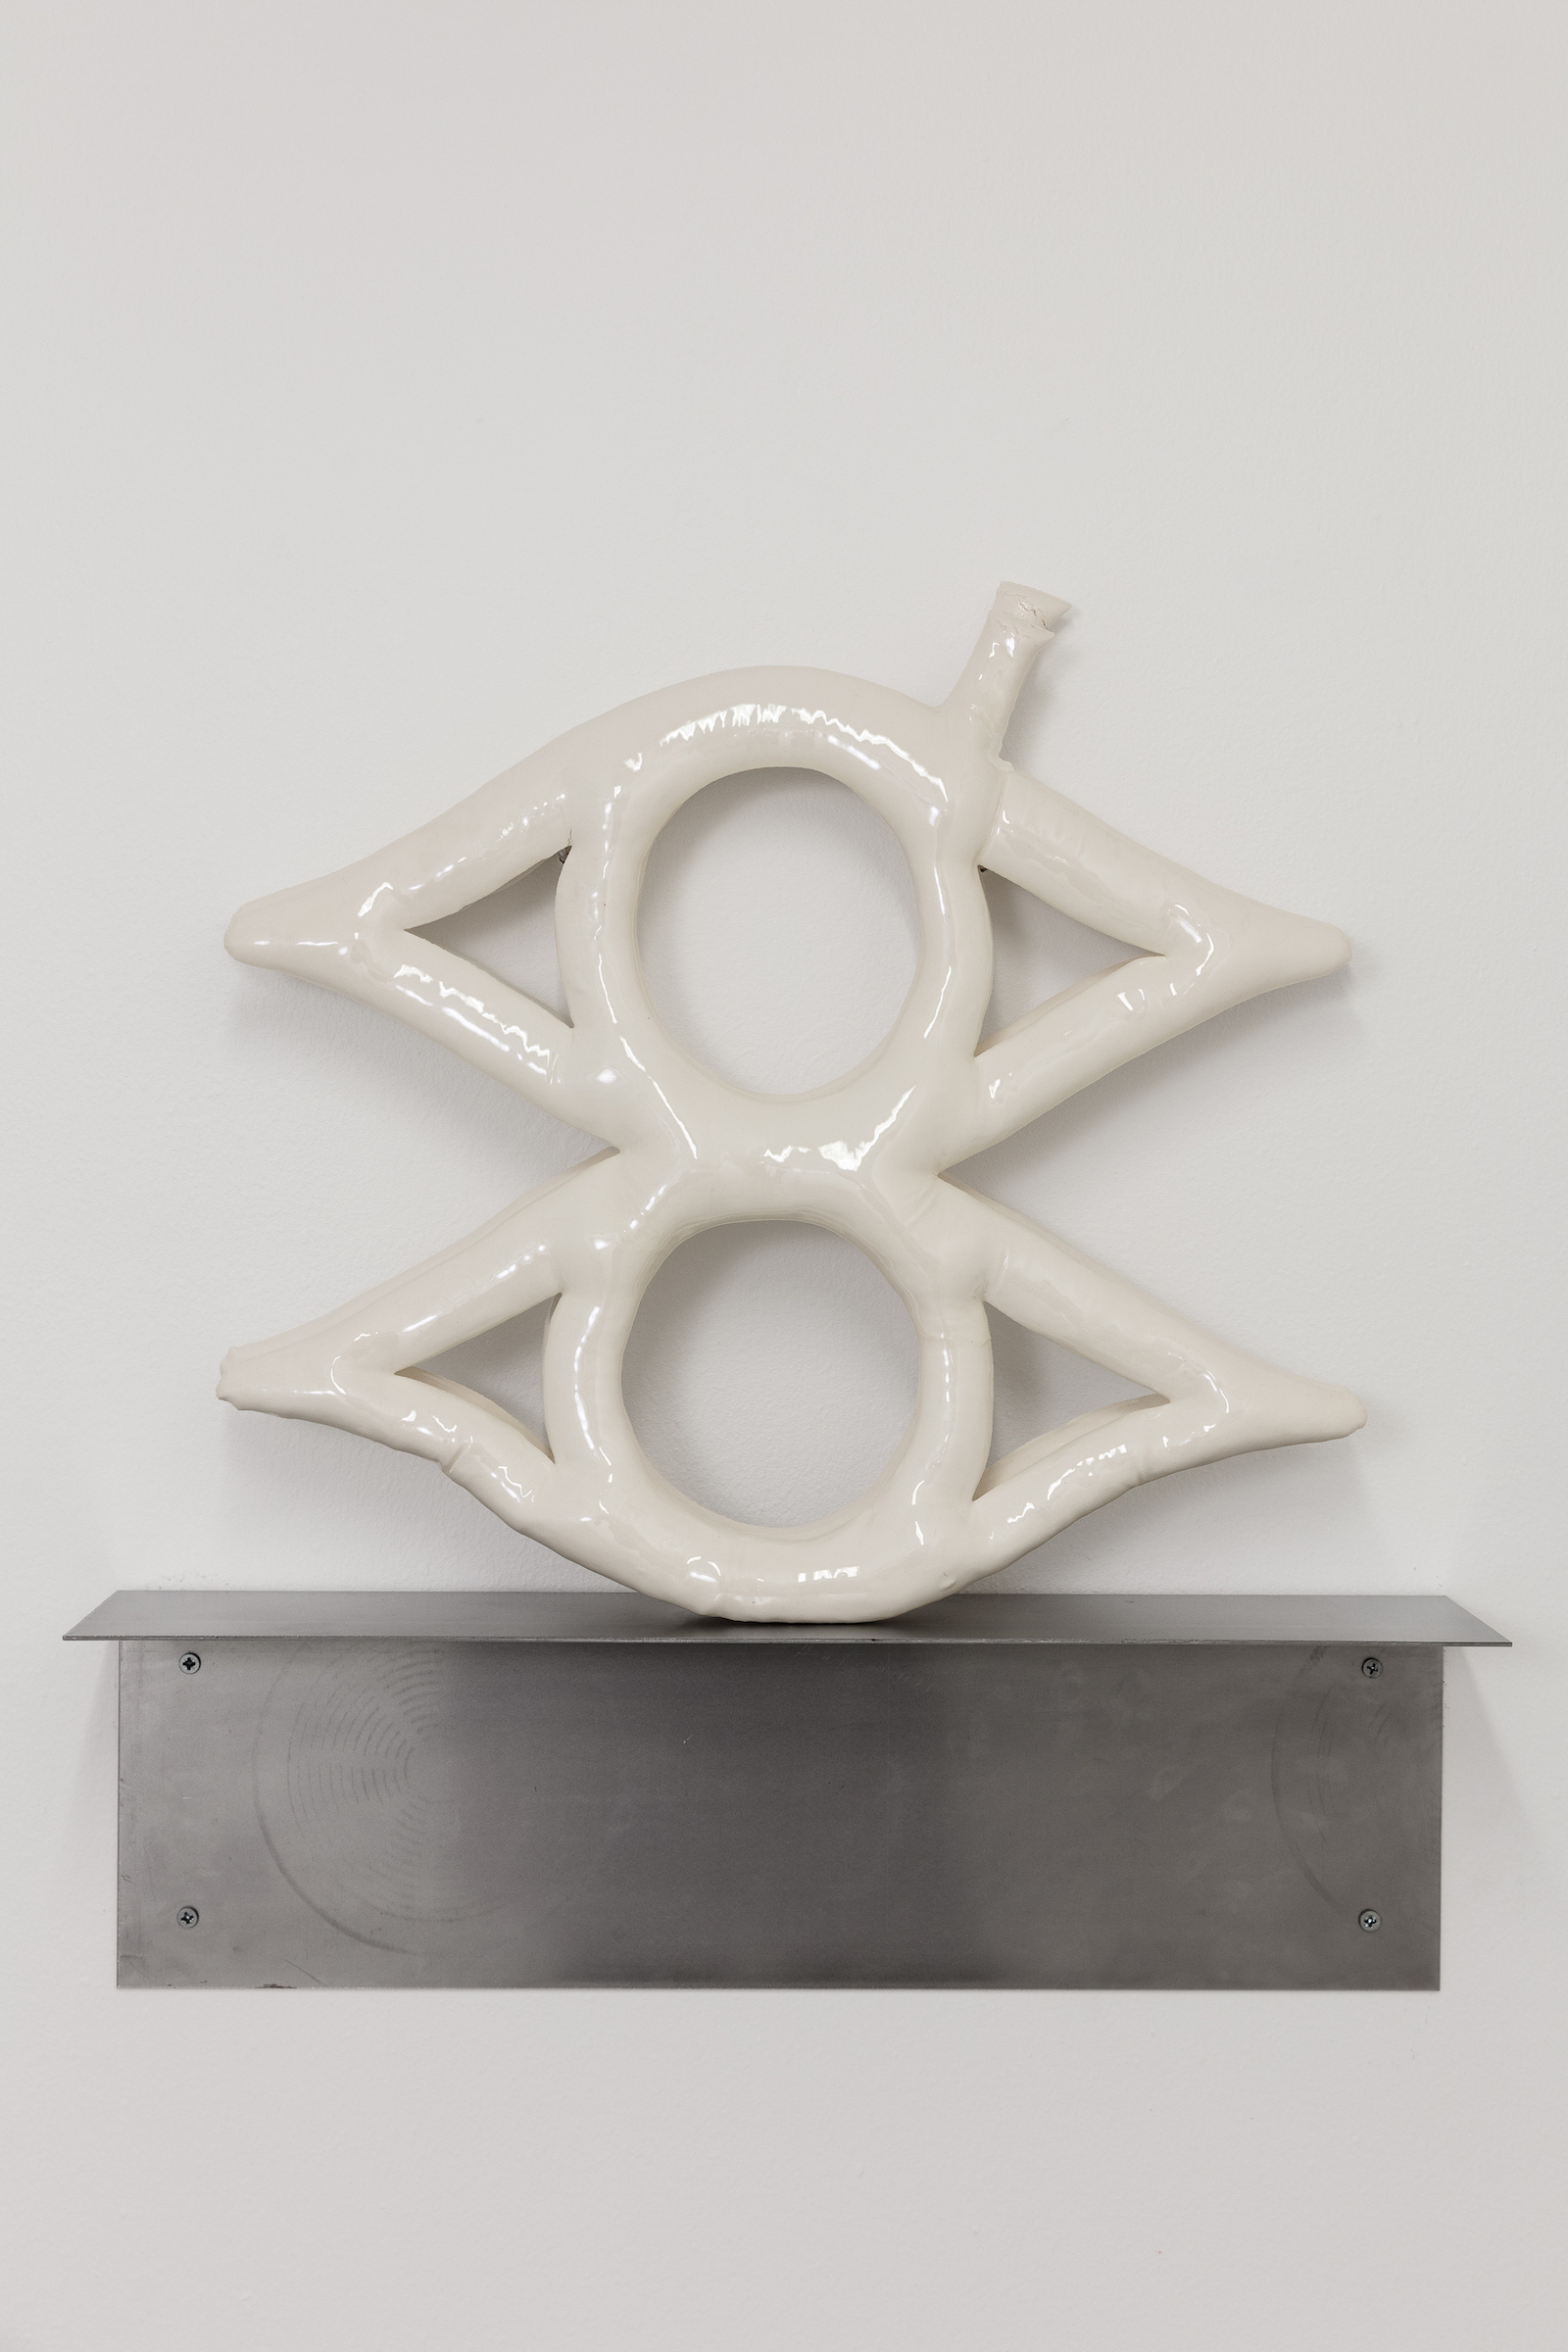 Julia K. Persson, Pocket mirror, 2023, Glazed porcelain, steel shelf, 60 x 13.5 x 56 cm